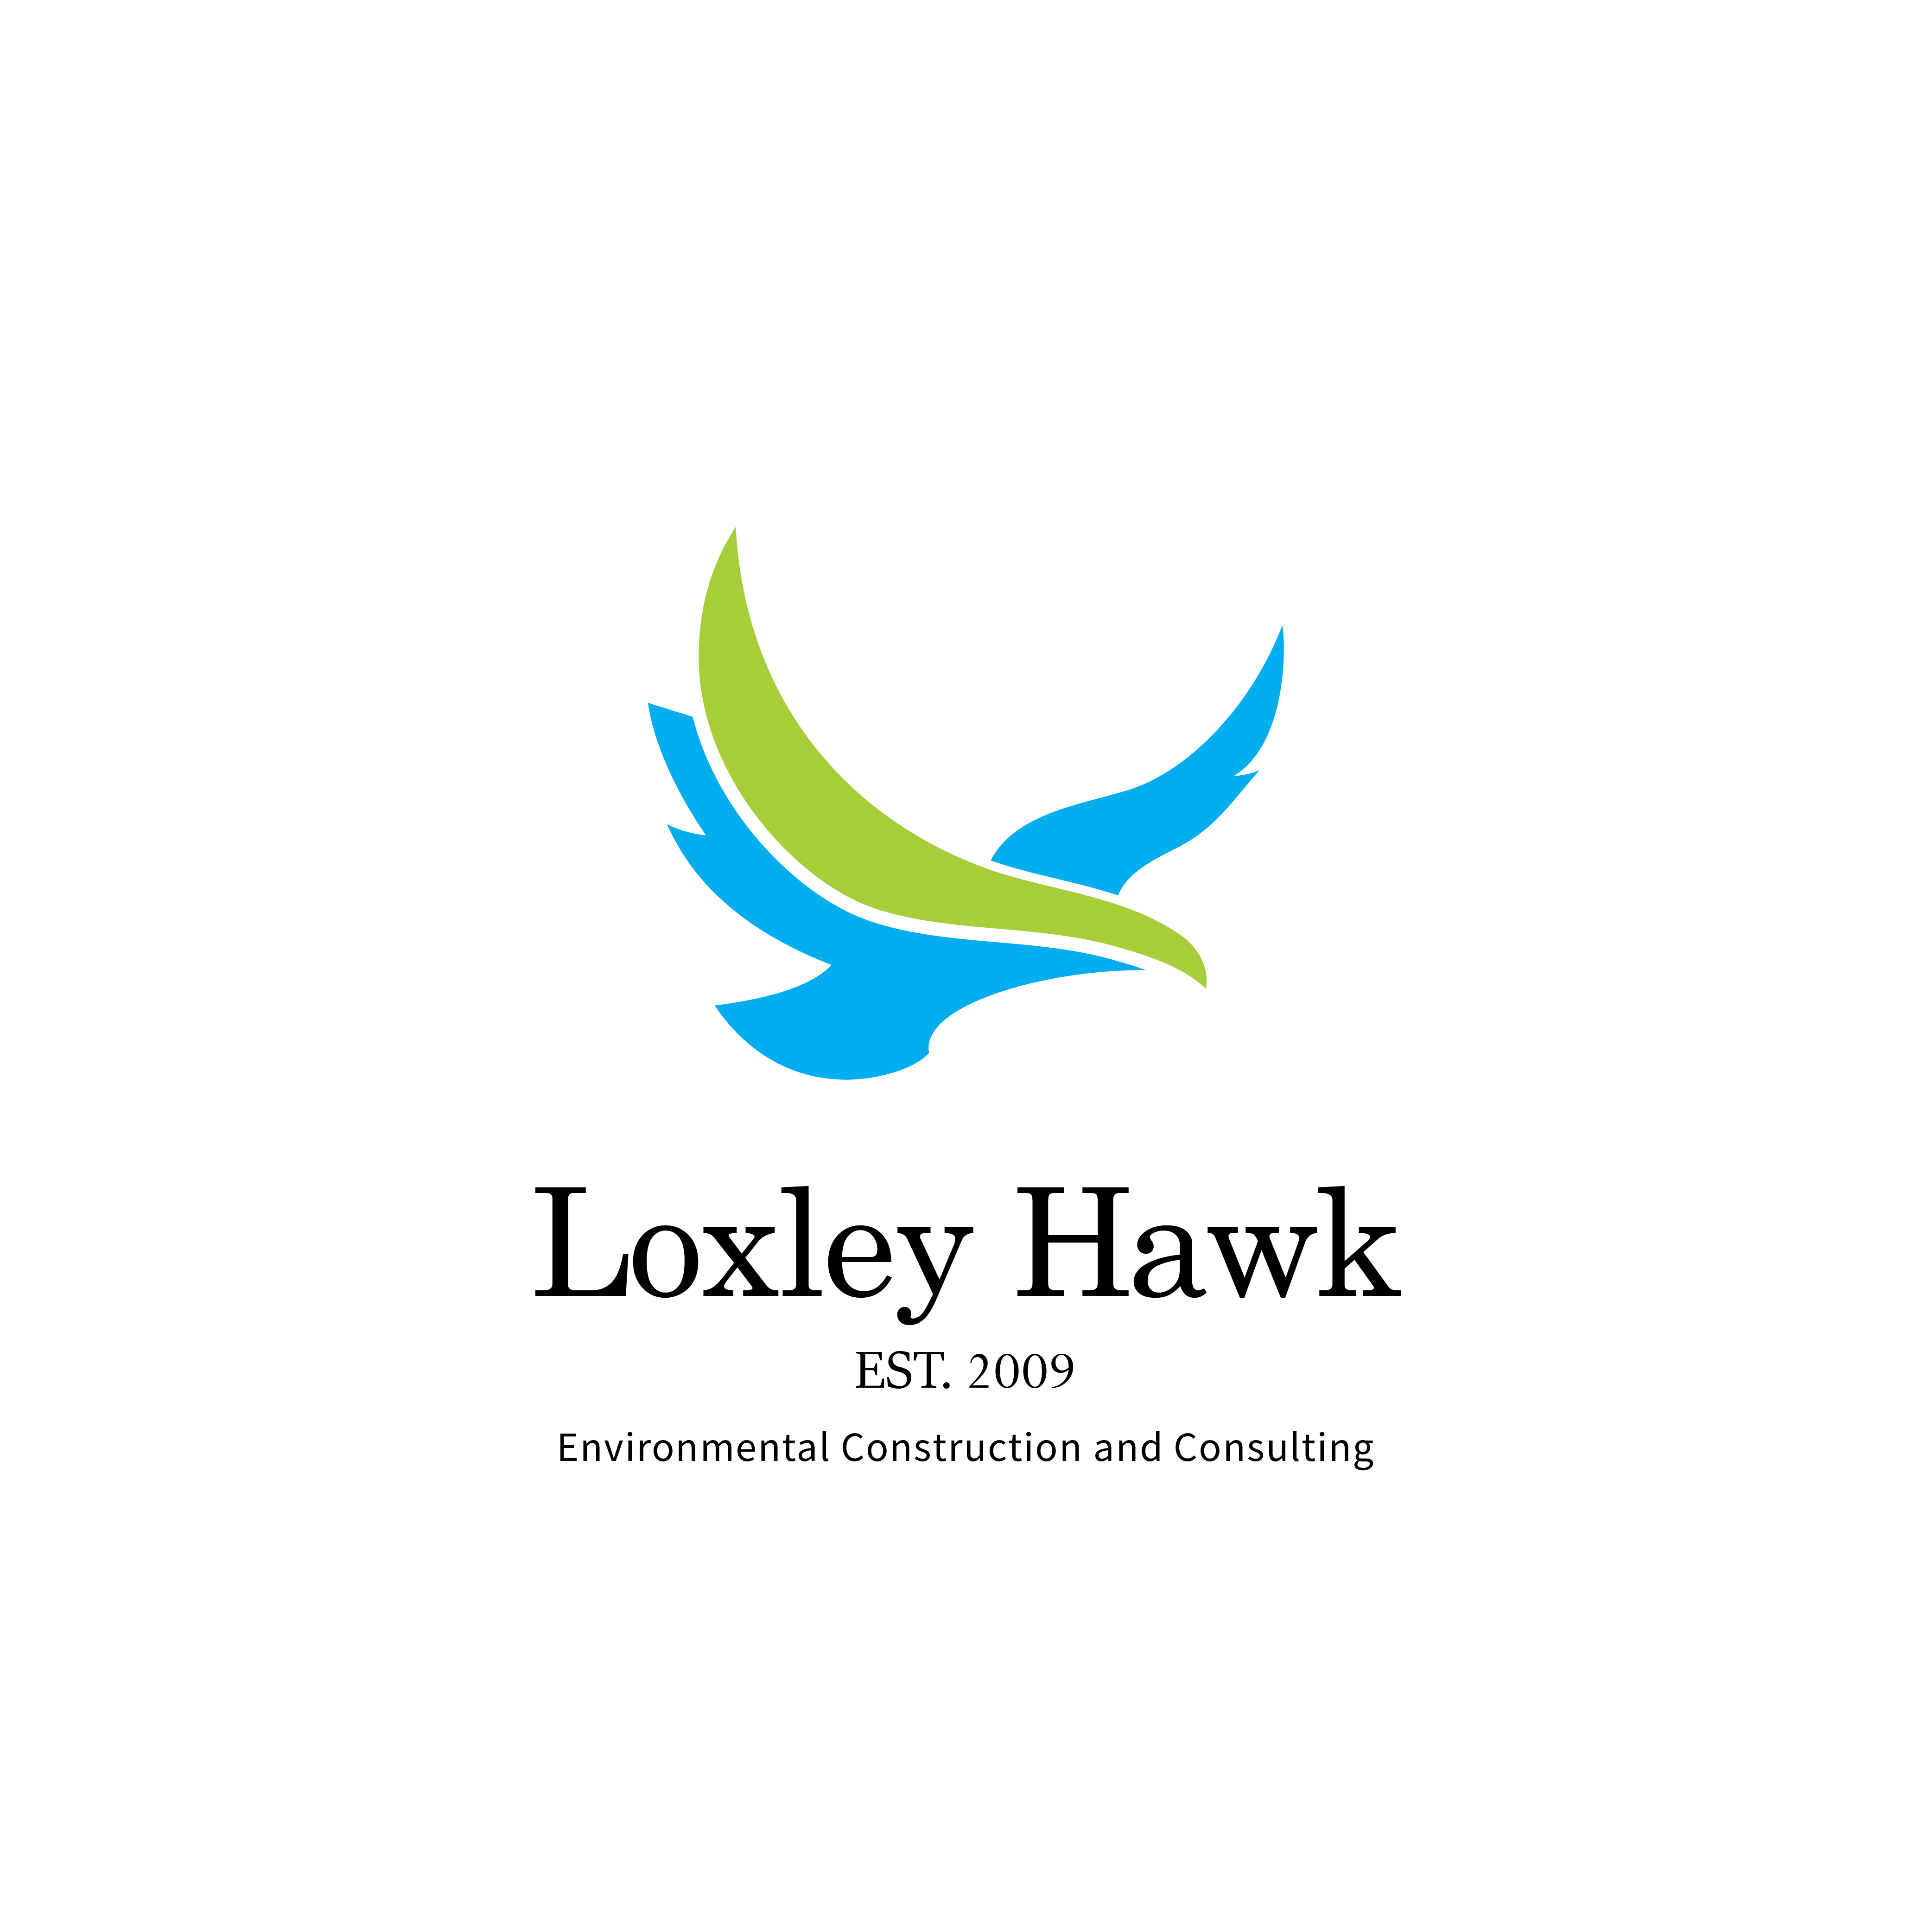 Loxley Hawk, Inc. company logo